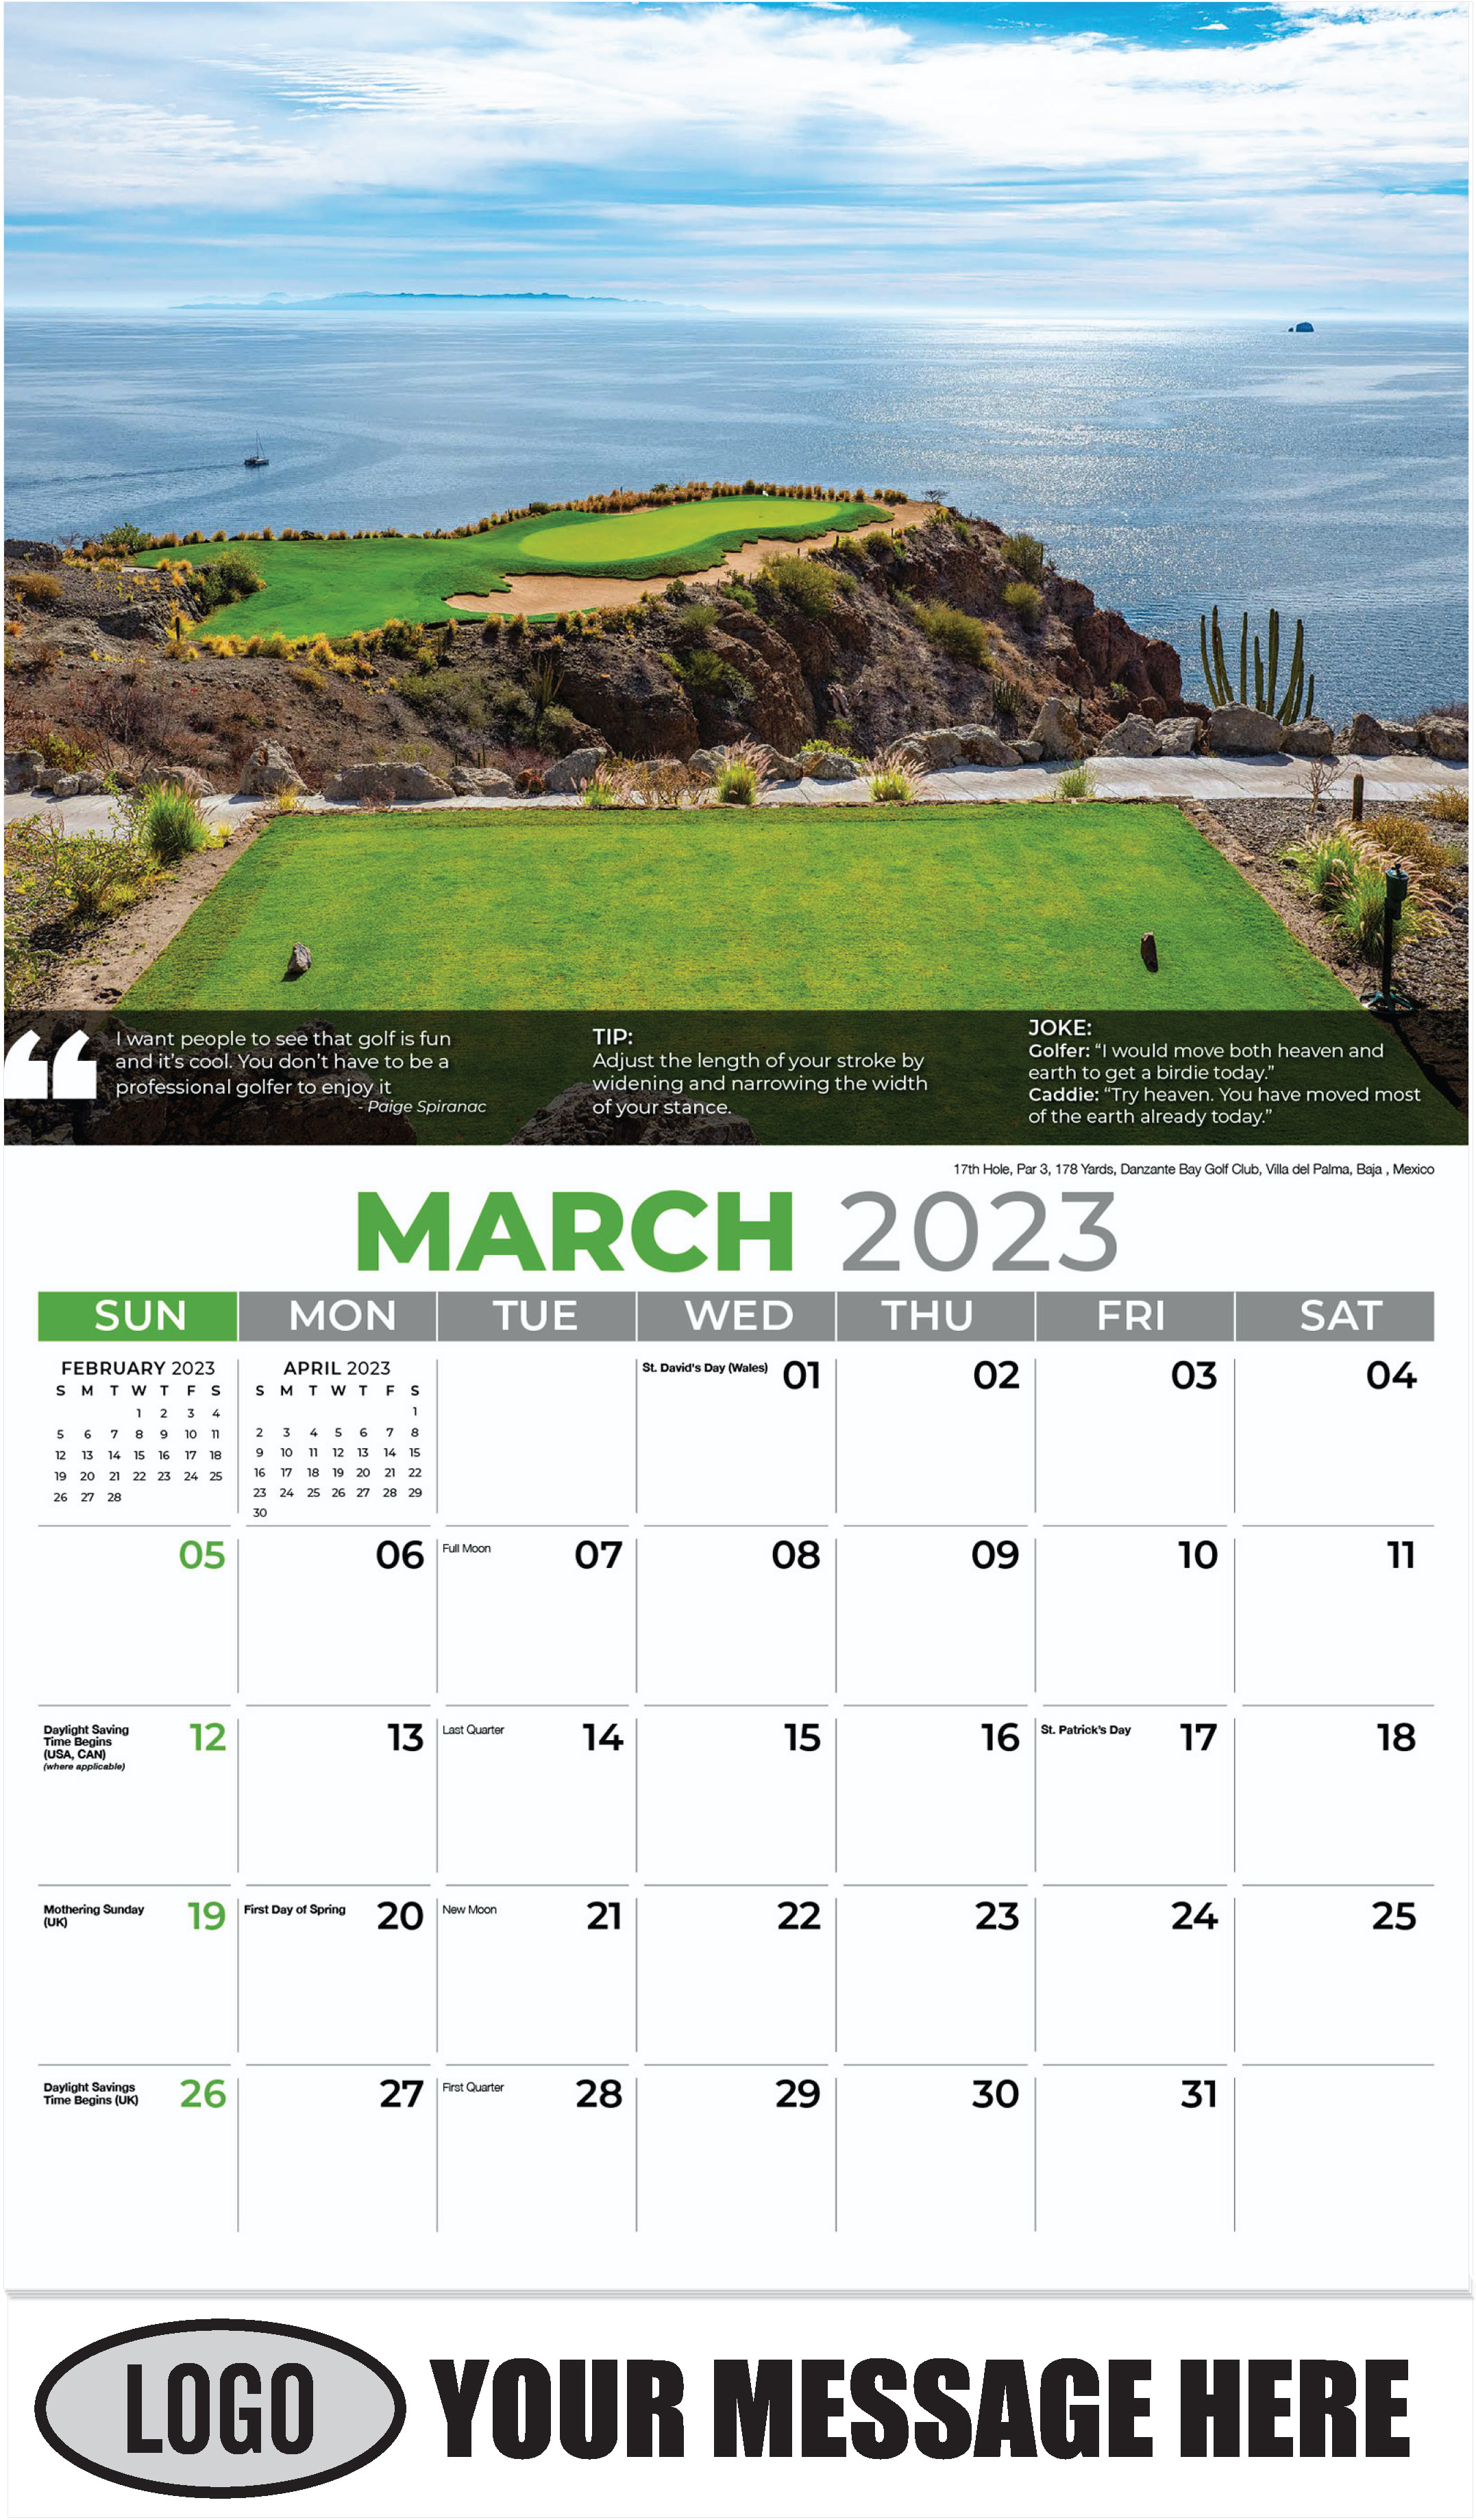 17th Hole, Par 3, 178 Yards, Danzante Bay Golf Club, Villa del Palma, Baja , Mexico - March - Golf Tips  (Tips, Quips and Holes) 2023 Promotional Calendar